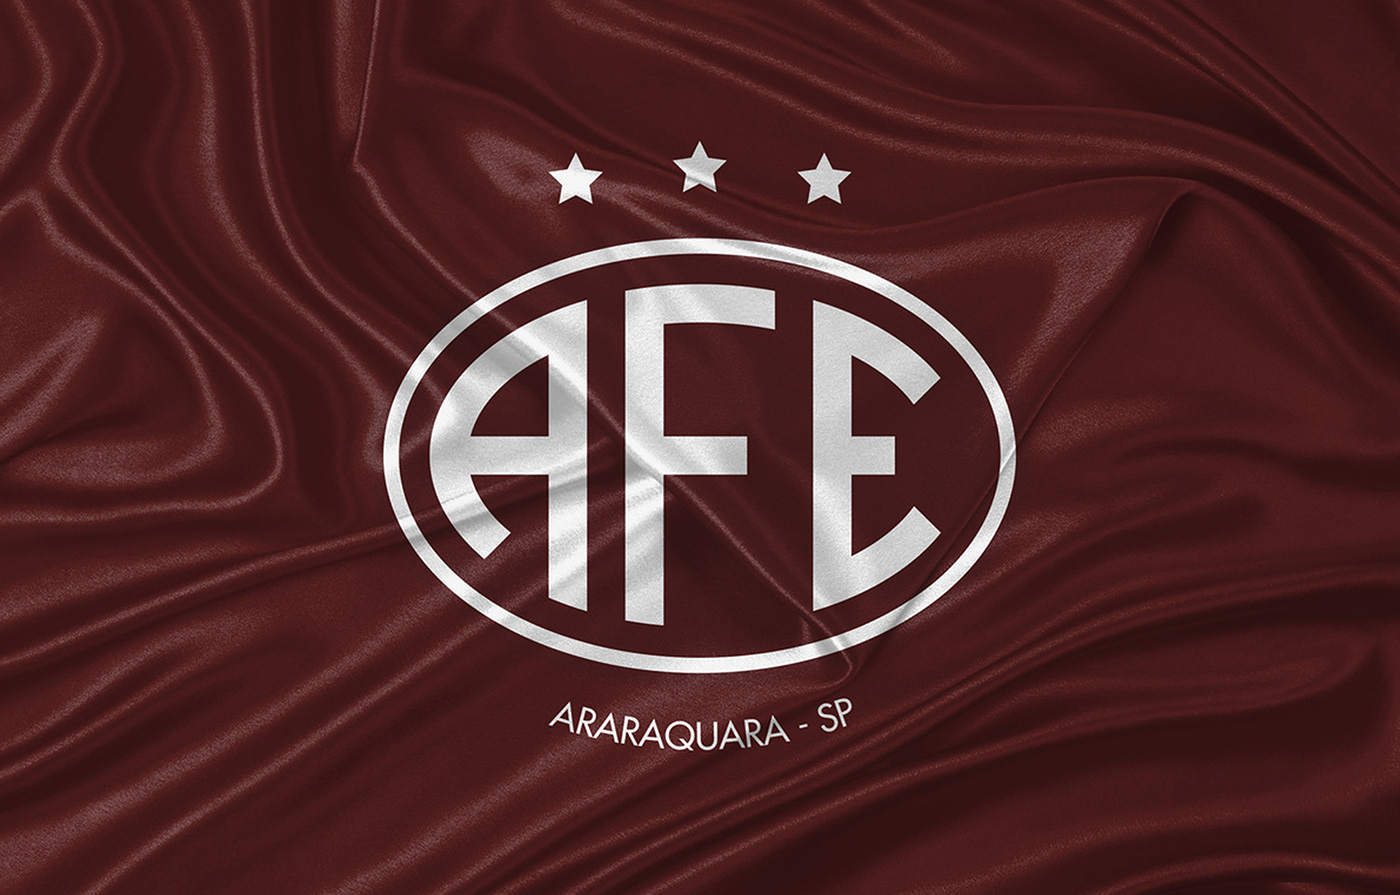 ferroviária football soccer logo Araraquara brand Brazil crest identidade Rebrand